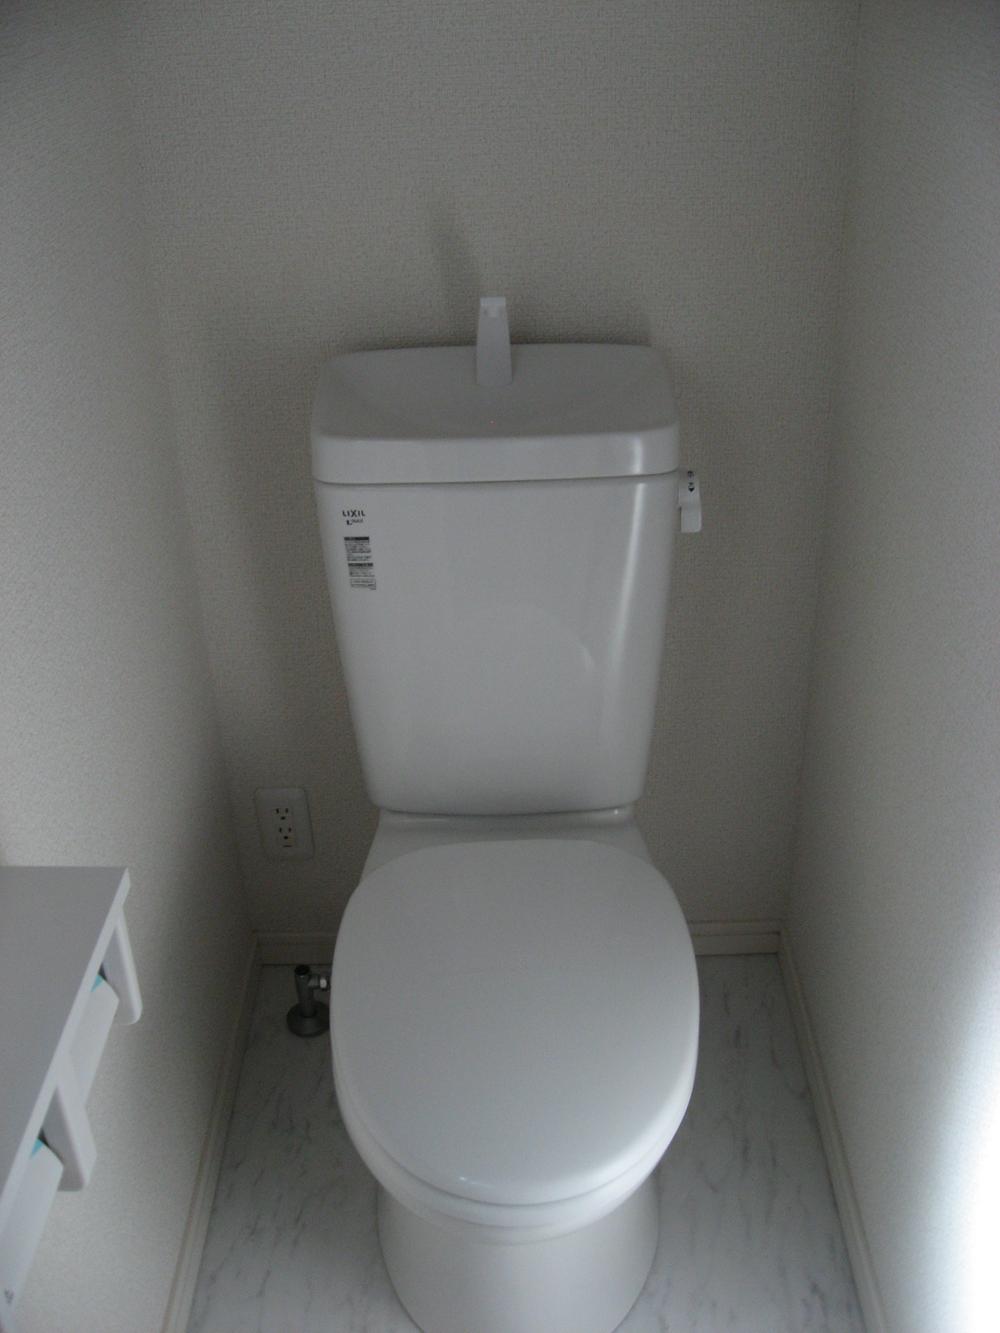 Toilet. Local (June 2013) Shooting